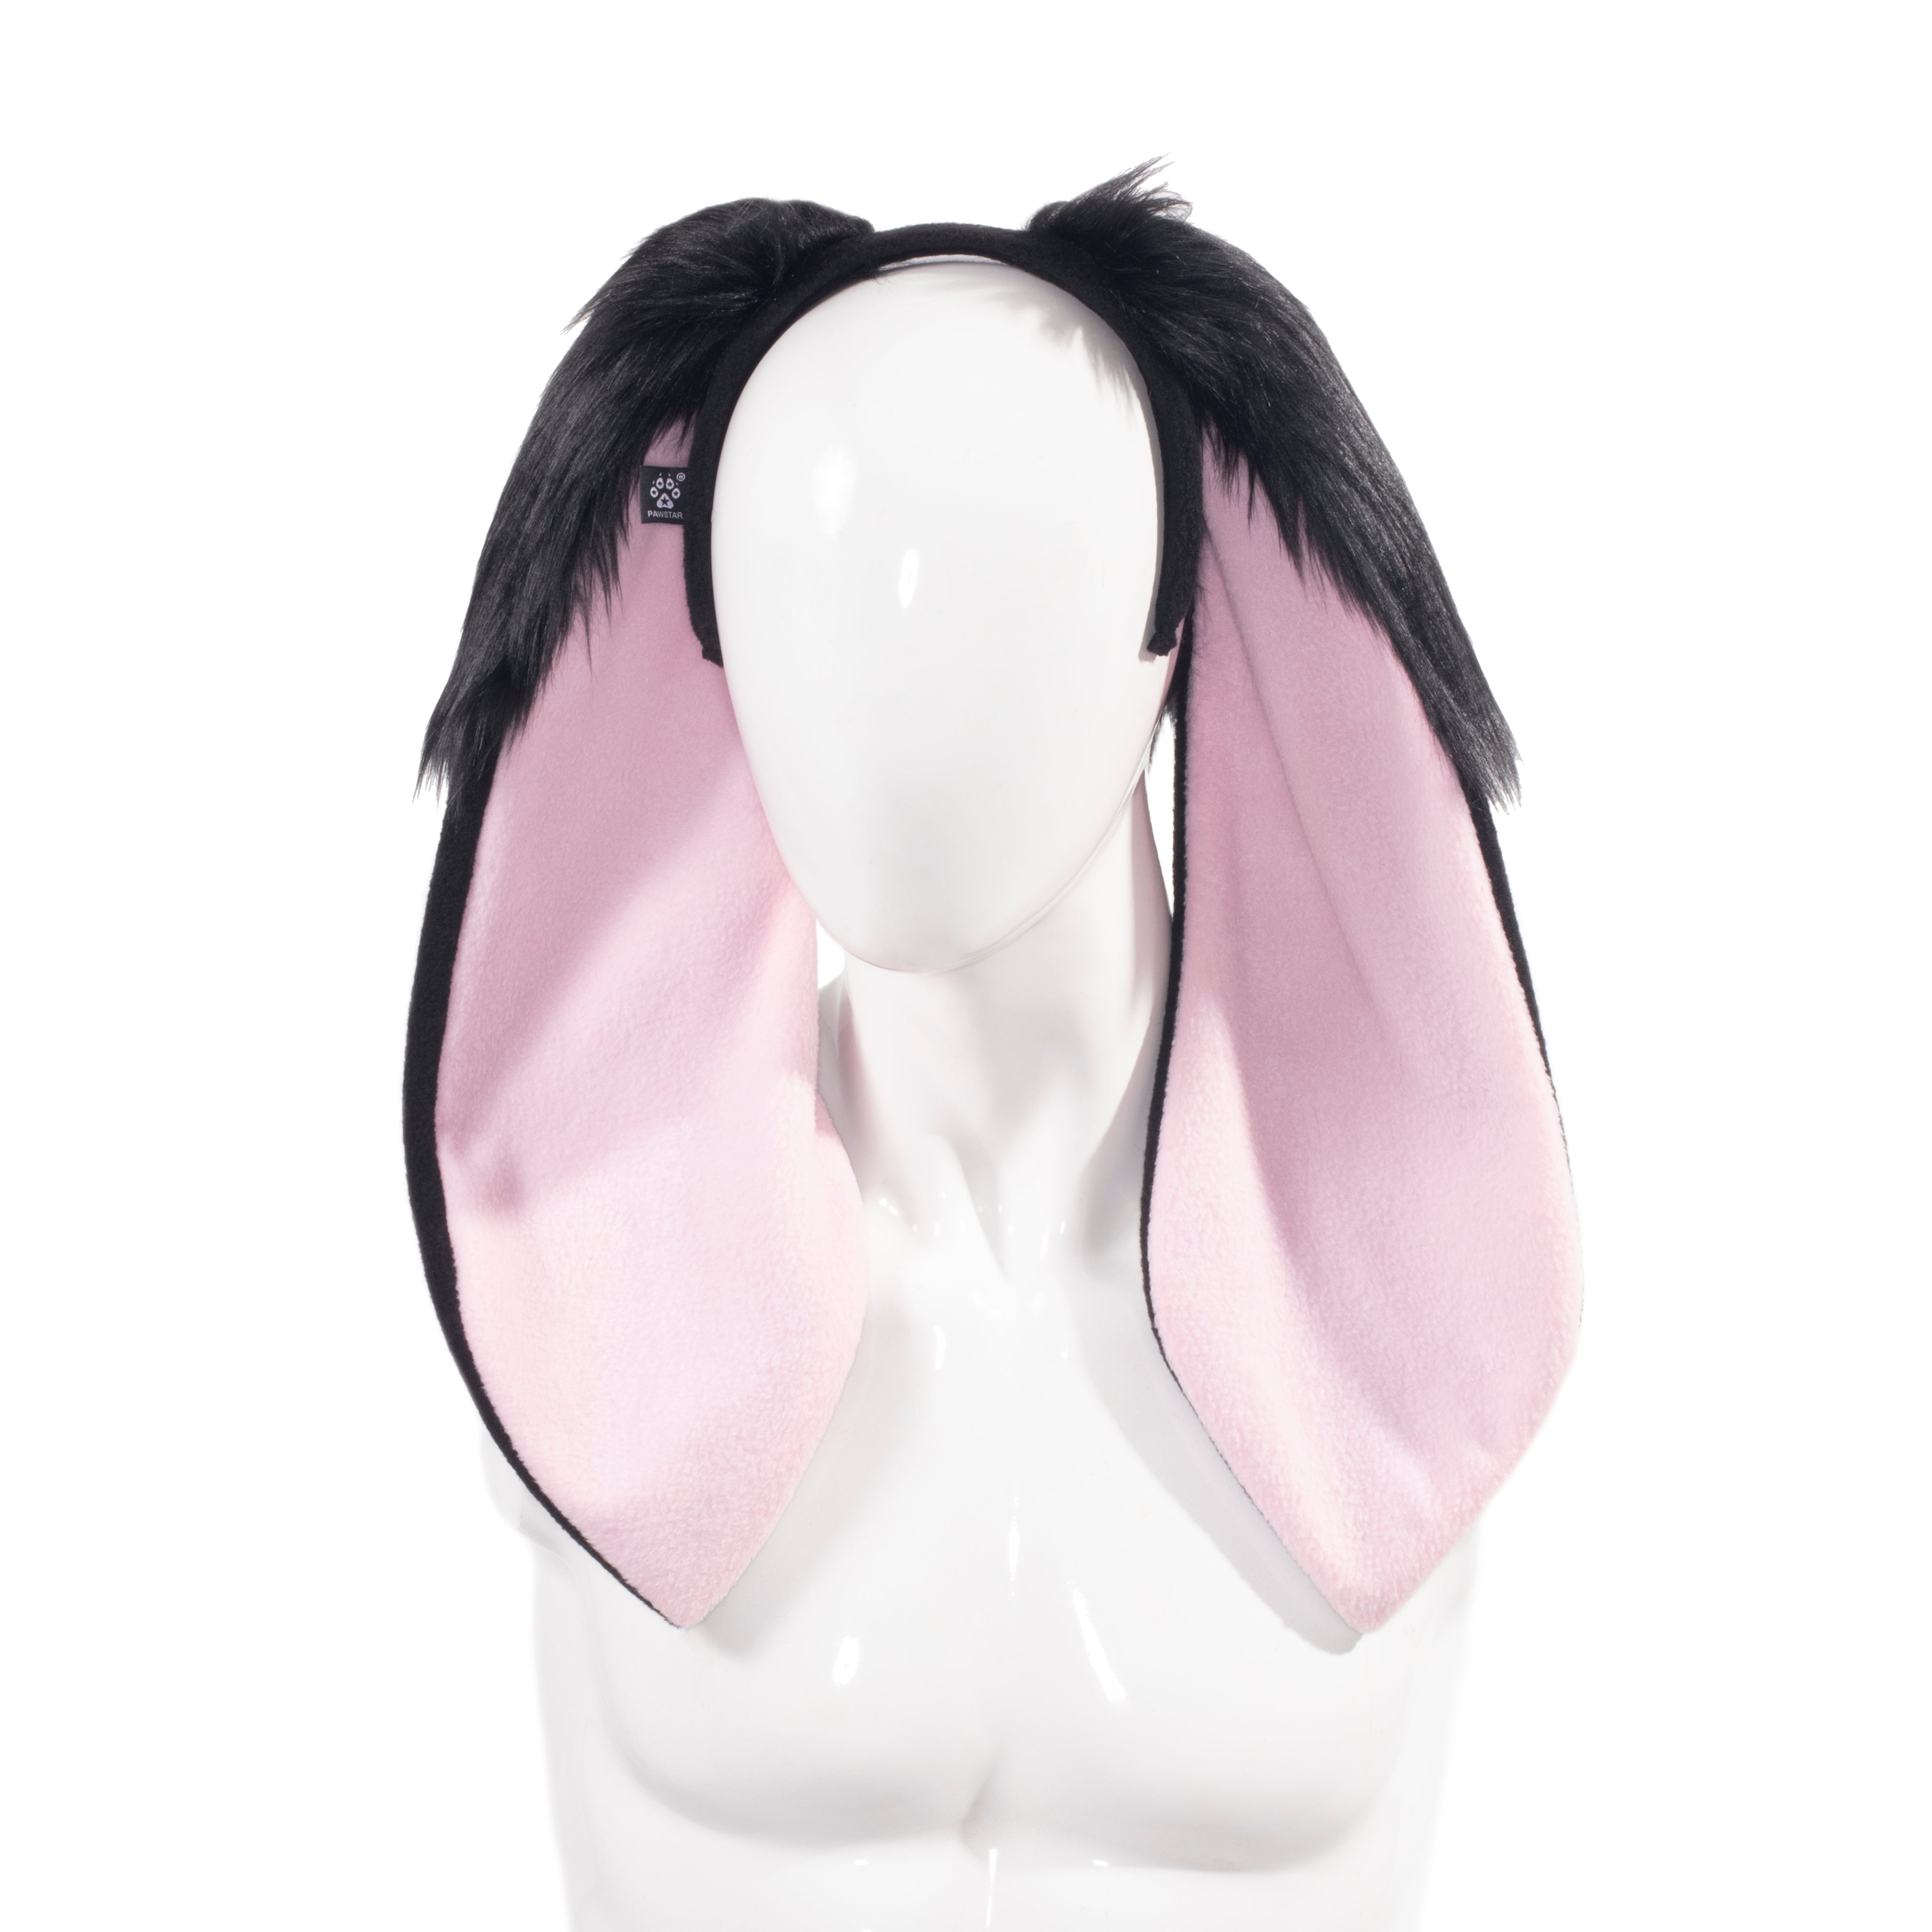 Pawstar Classic Floppy Bunny Rabbit Headband easter bugs judy hopps furry fluffy partial fursuit halloween costume or cosplay accessory black